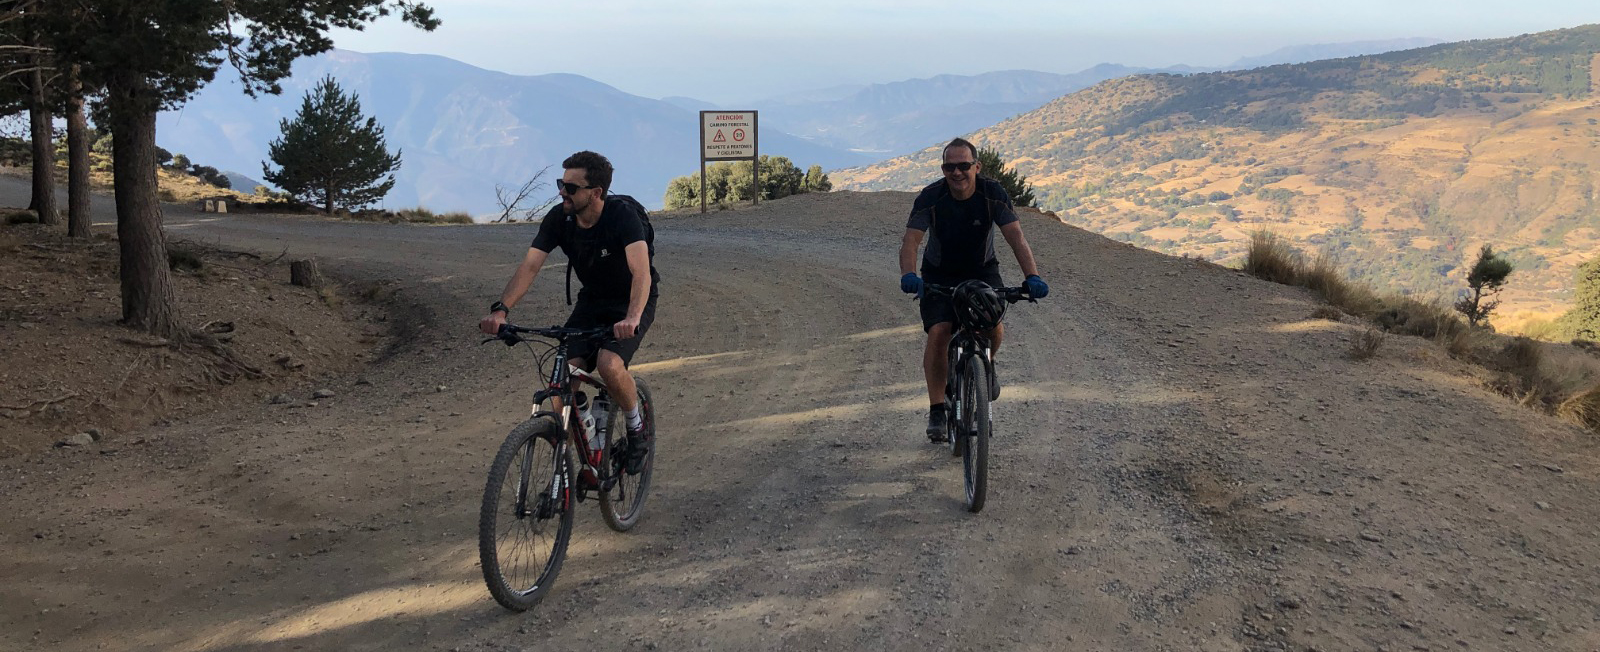 Cycling across the Sierra Nevada